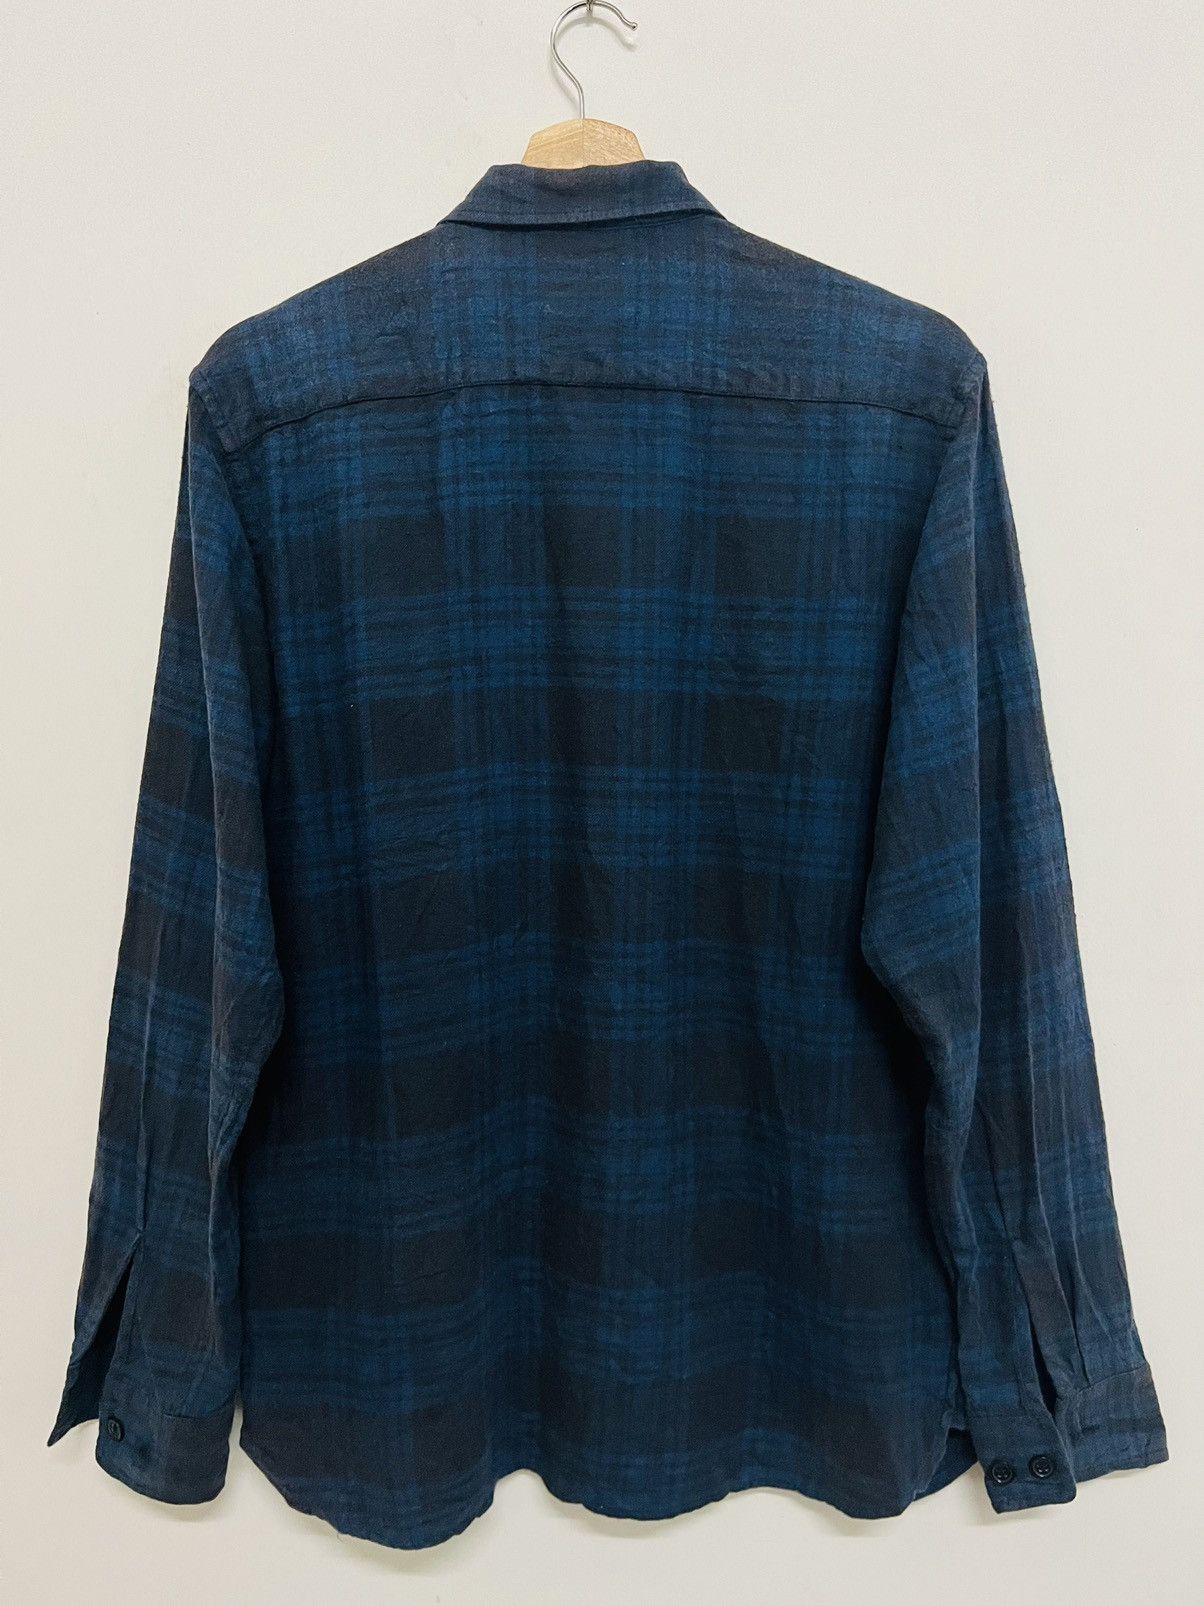 Supreme Plaid Flannel Workshirt - 10